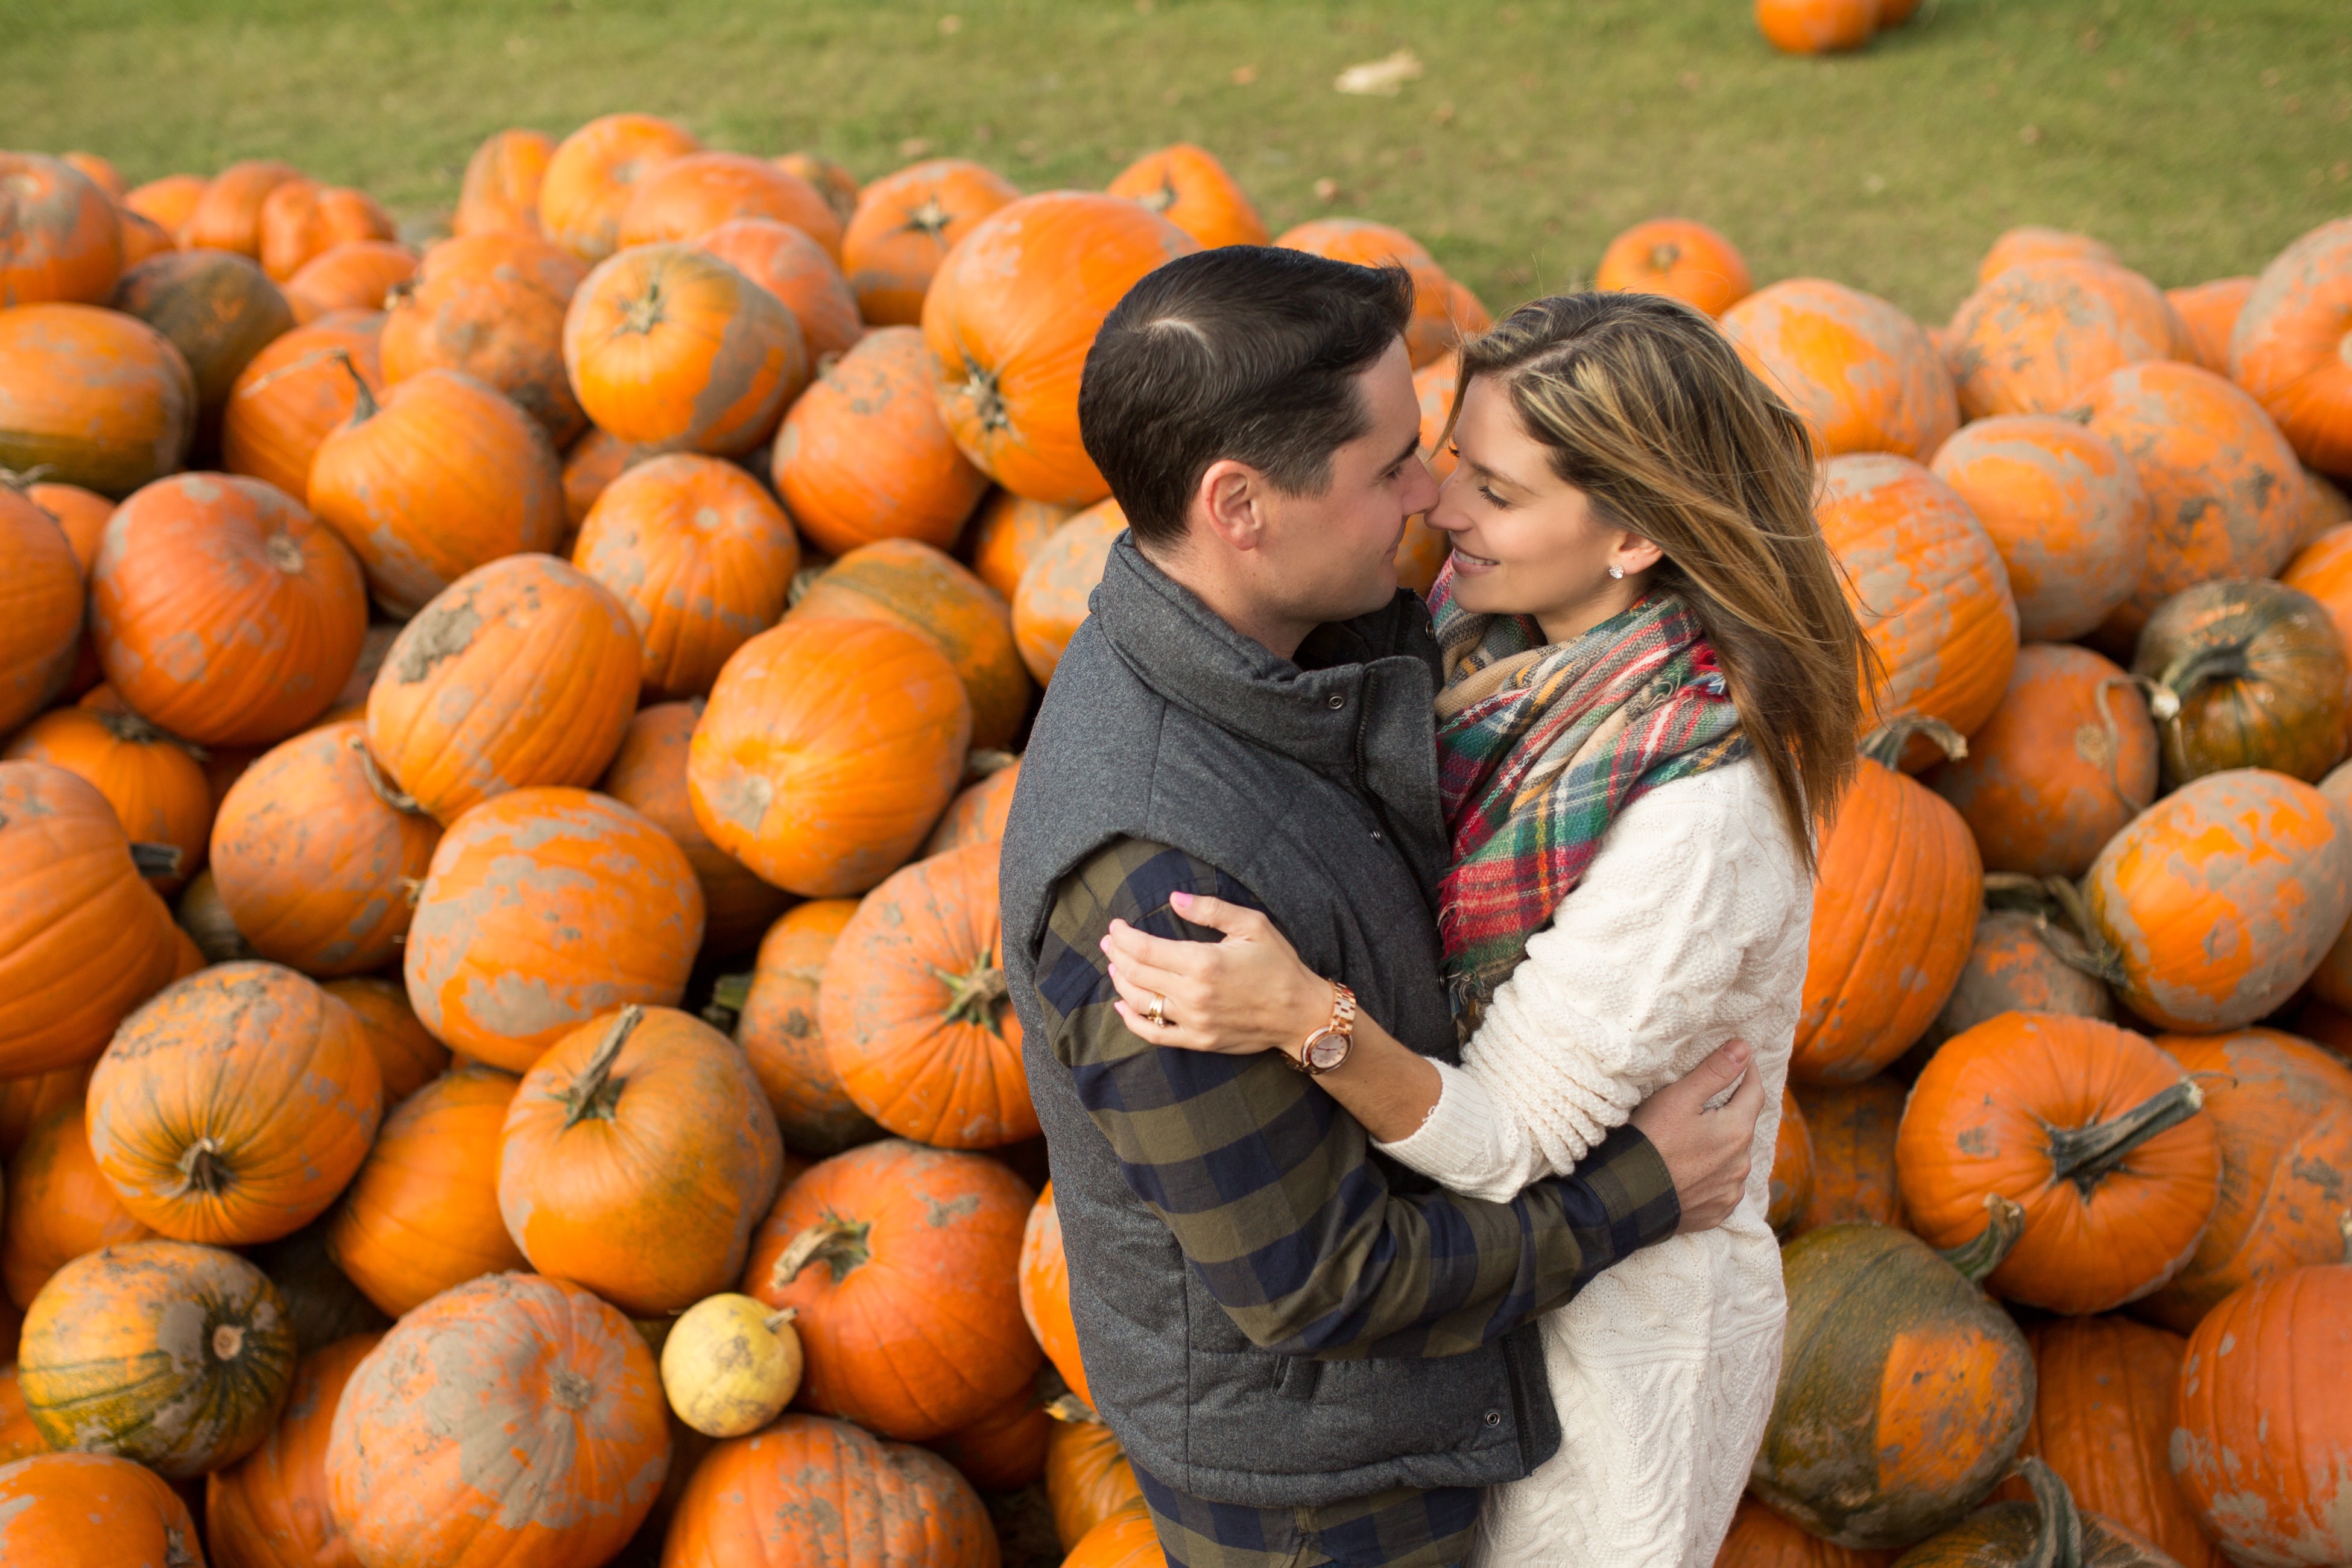 Fall pumpkin patch photos sparkleshinylove